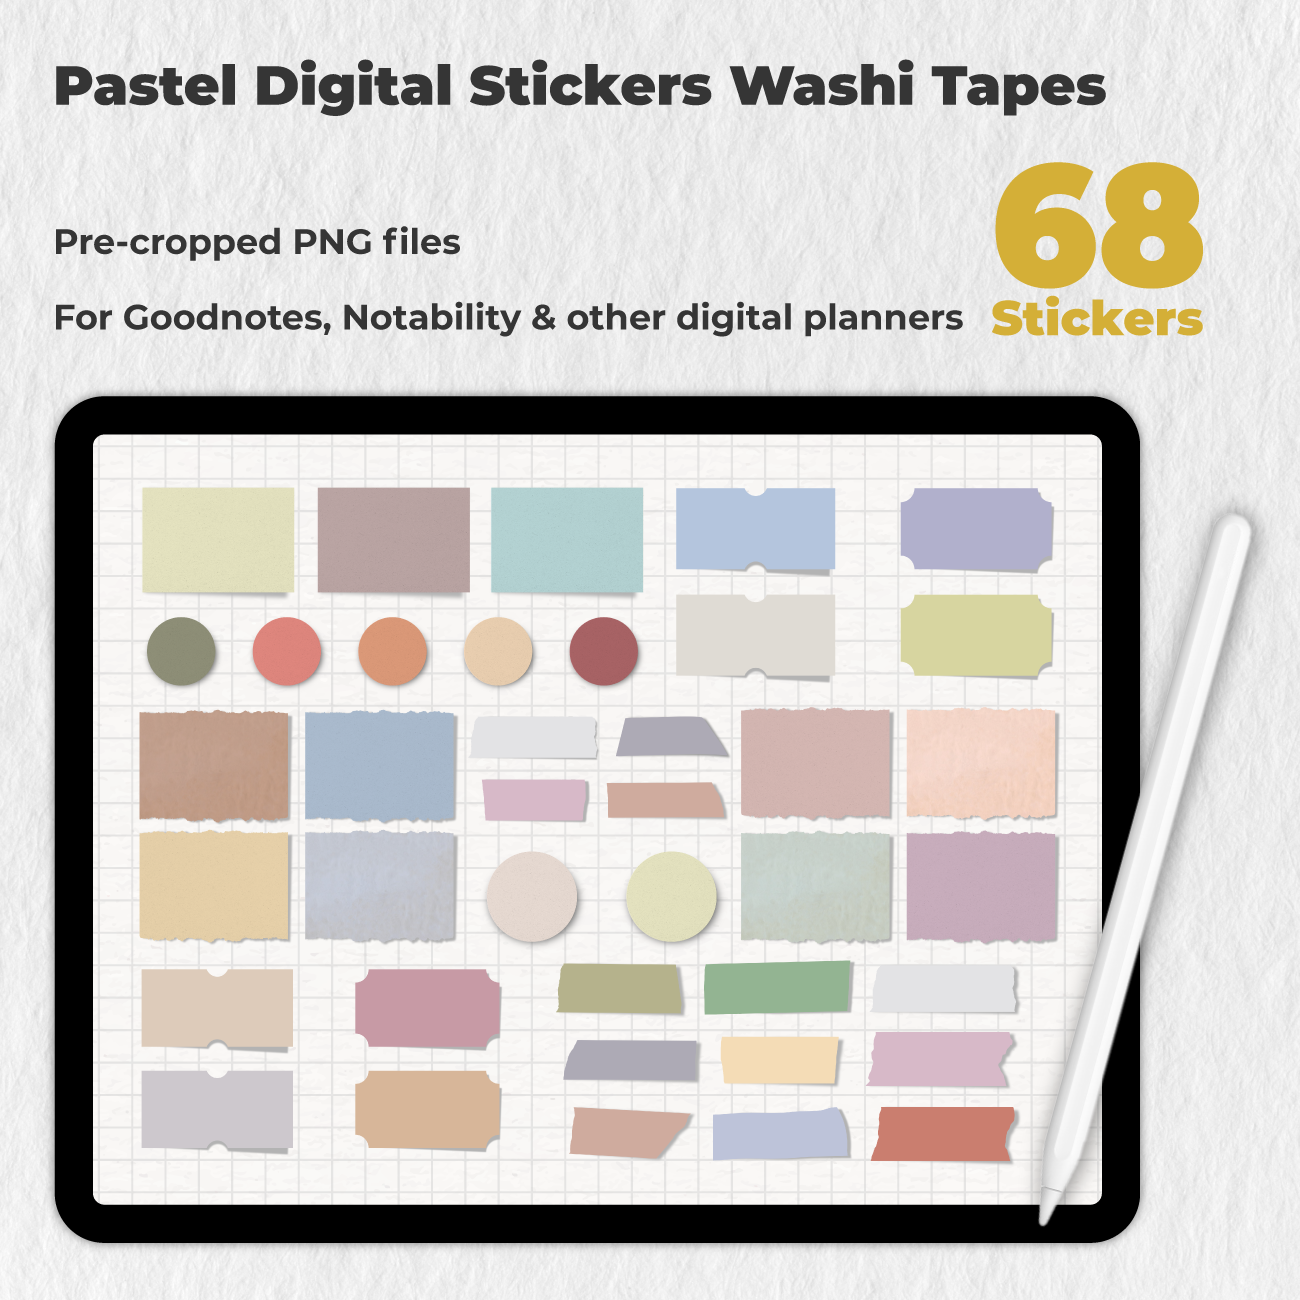 68 Pastel Digital Stickers Washi Tapes